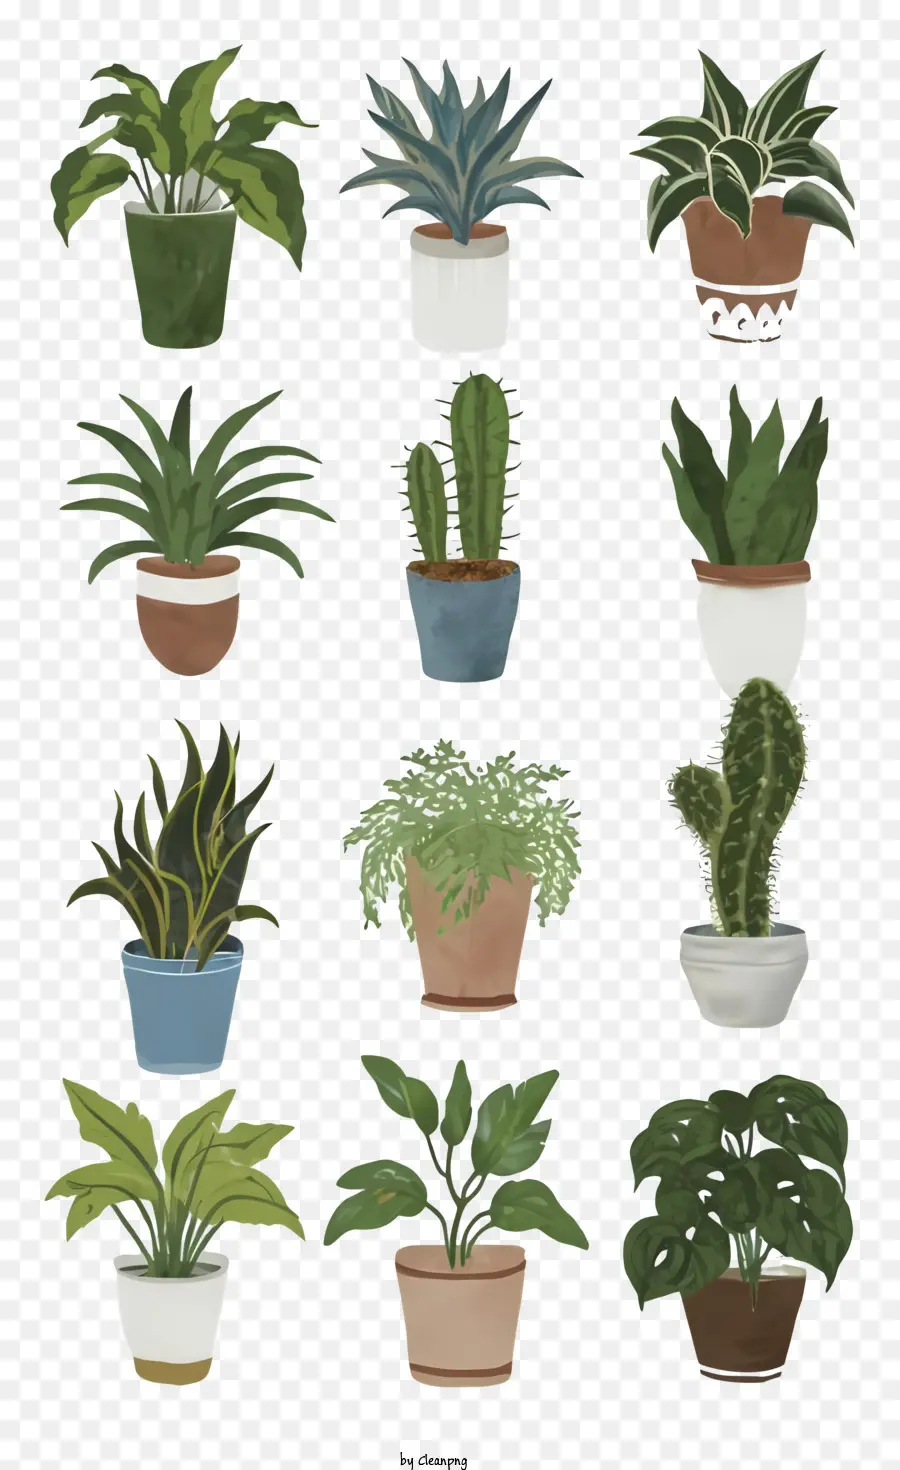 piante in vaso succulenti cactus foglie lunghe piante colorate - Piante colorate e vasi in vaso di varie dimensioni